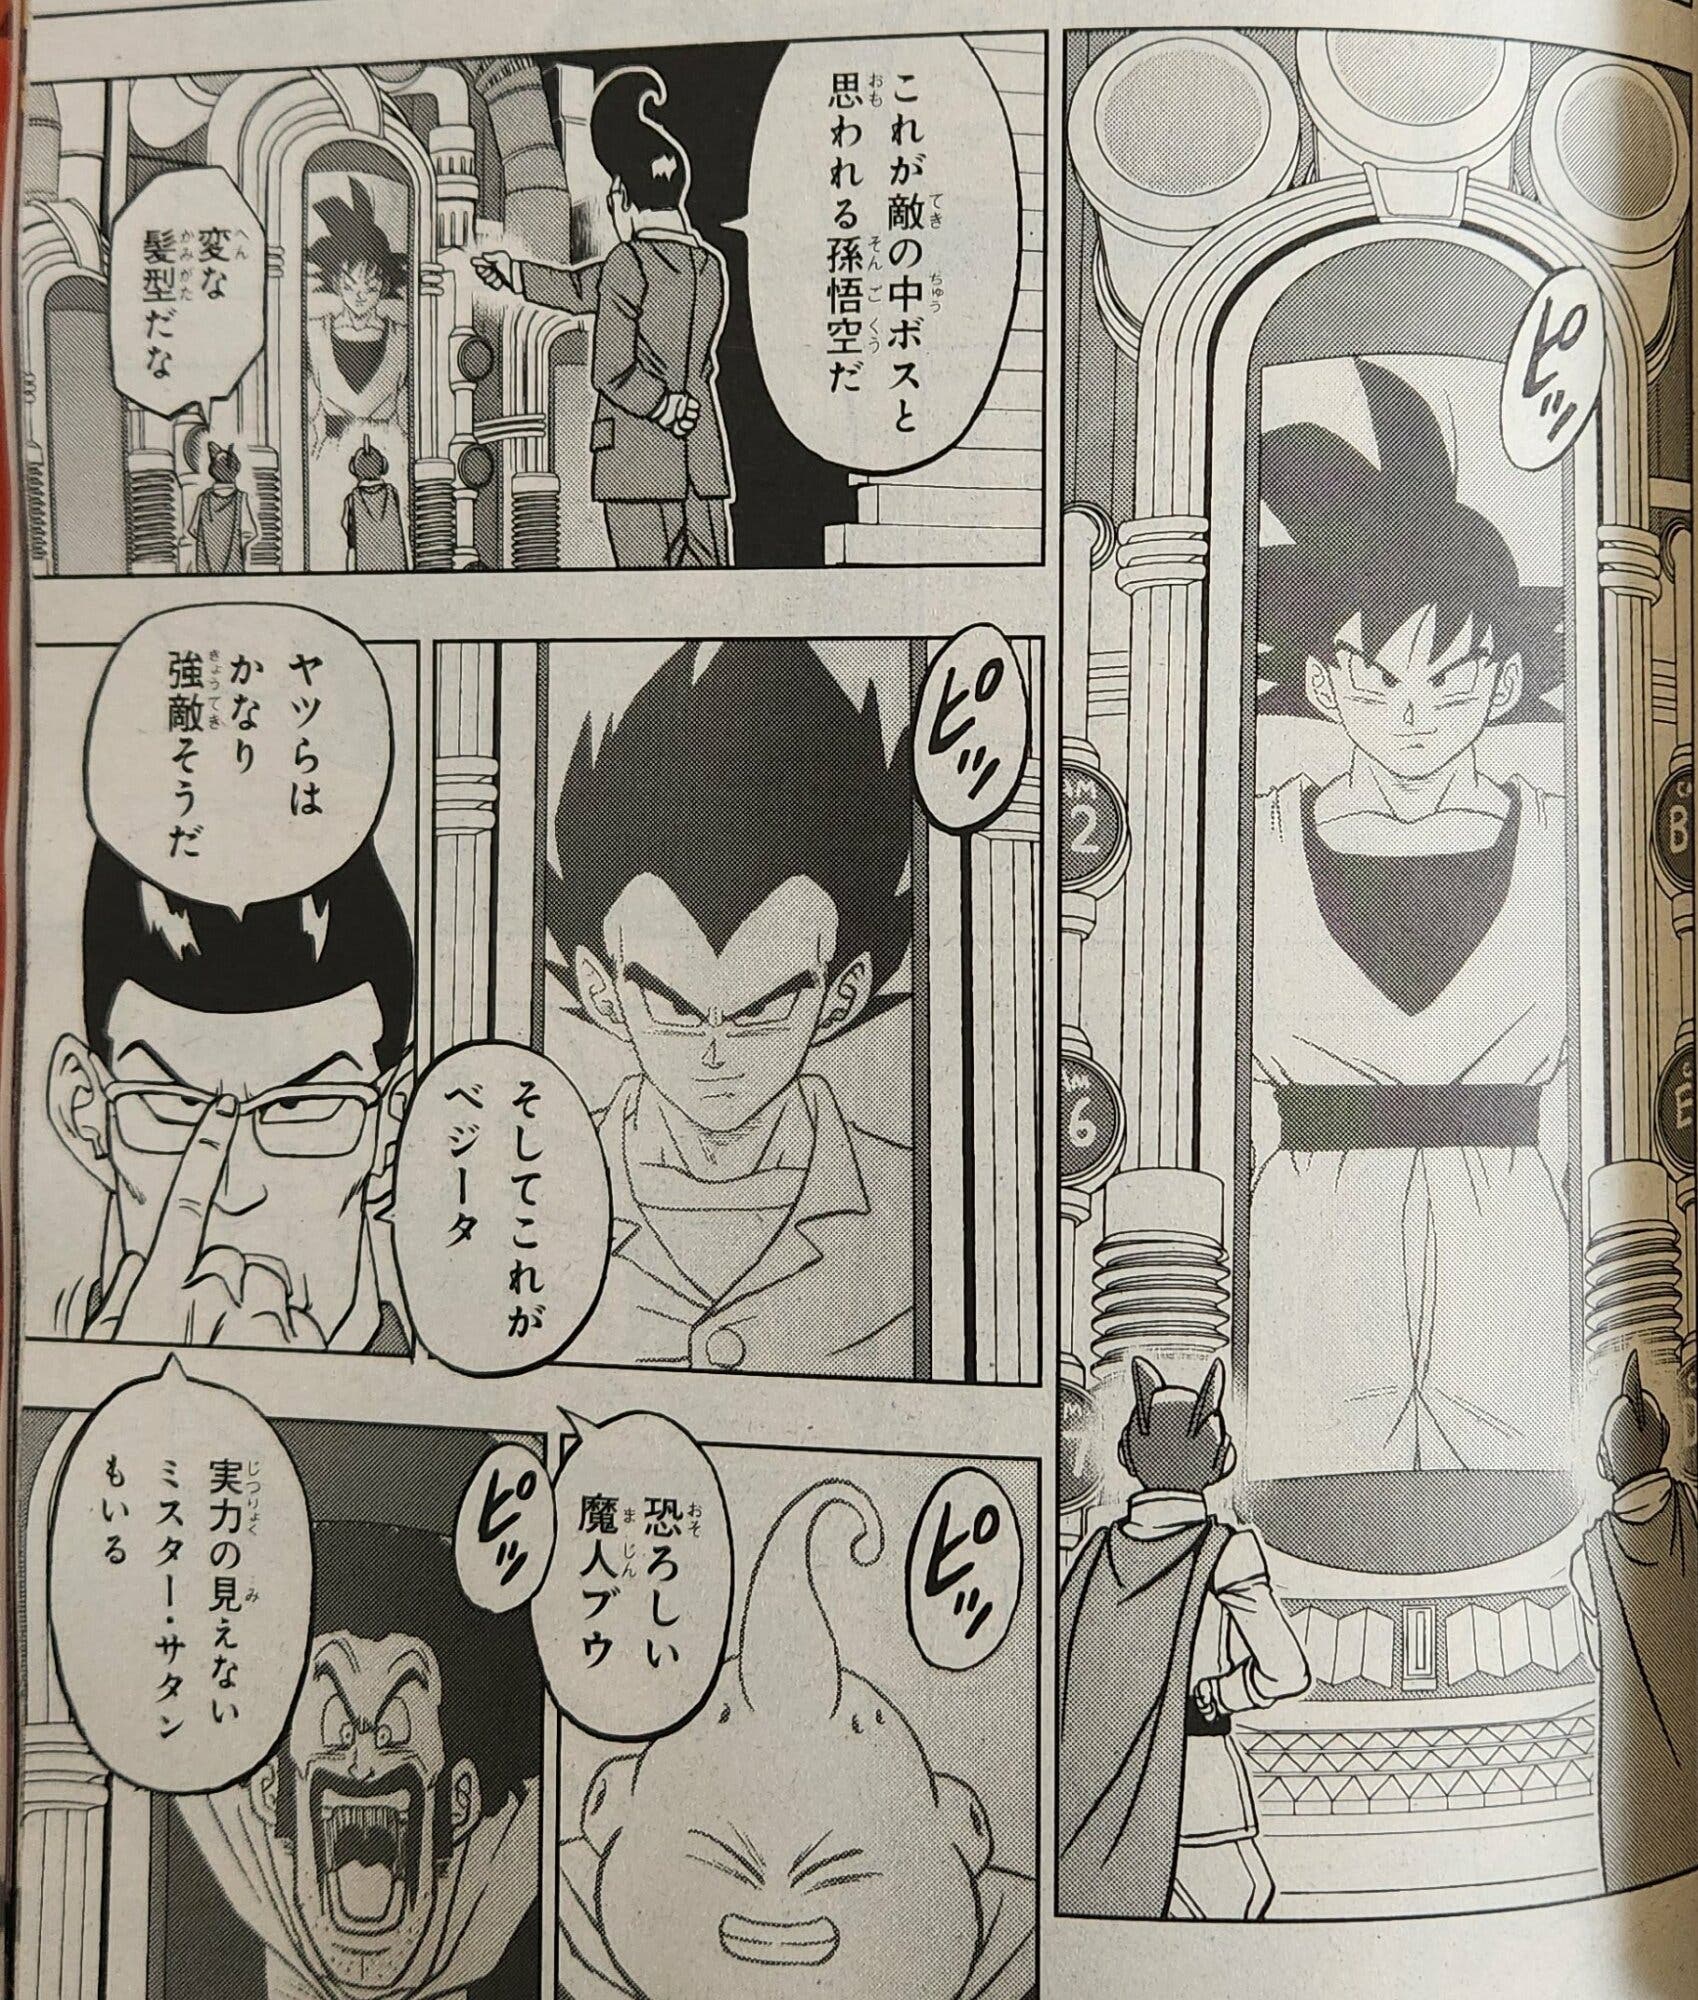 Dragon Ball Super: fecha de publicación oficial del capítulo 92 del manga, Manga Plus, Shueisha, Leer ONLINE, DEPOR-PLAY